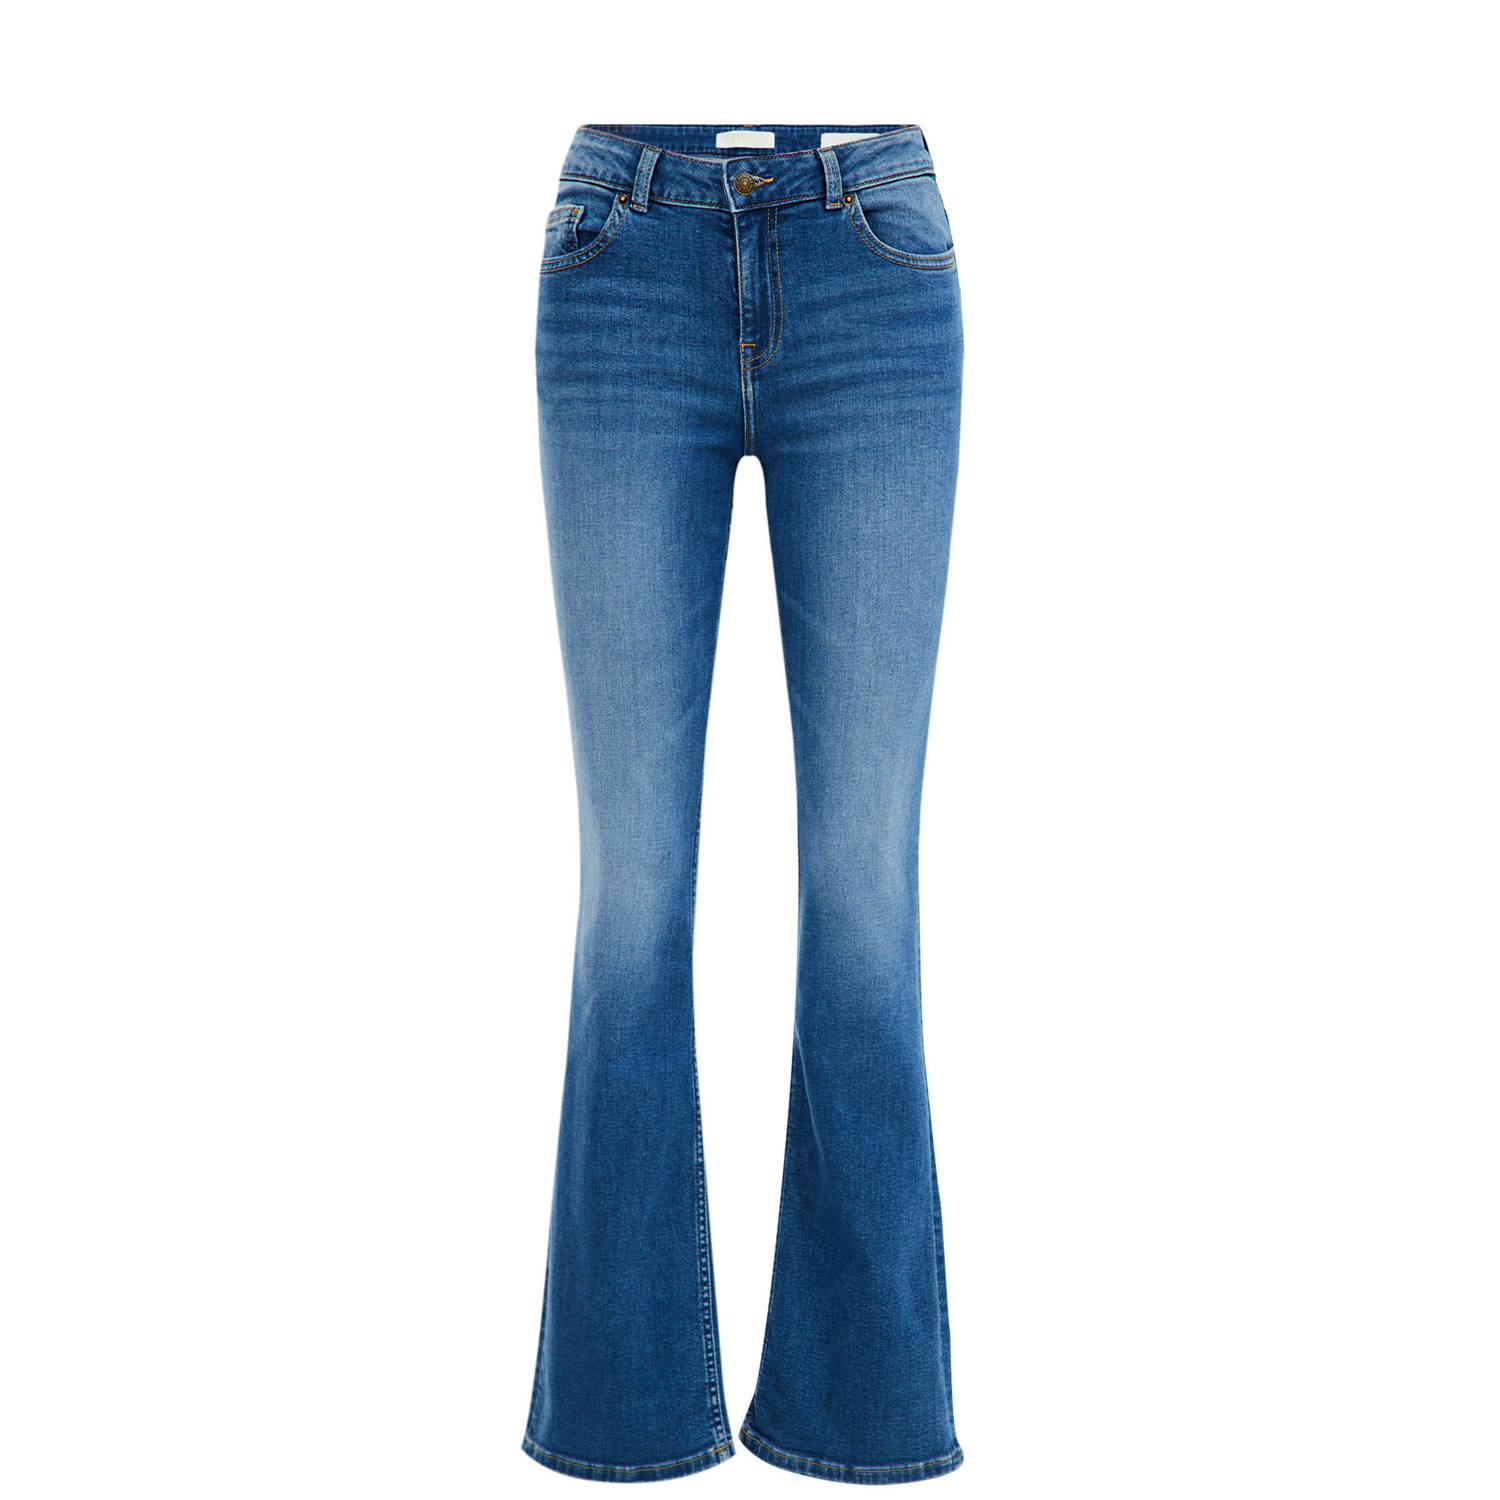 WE Fashion Blue Ridge flared jeans medium blue denim